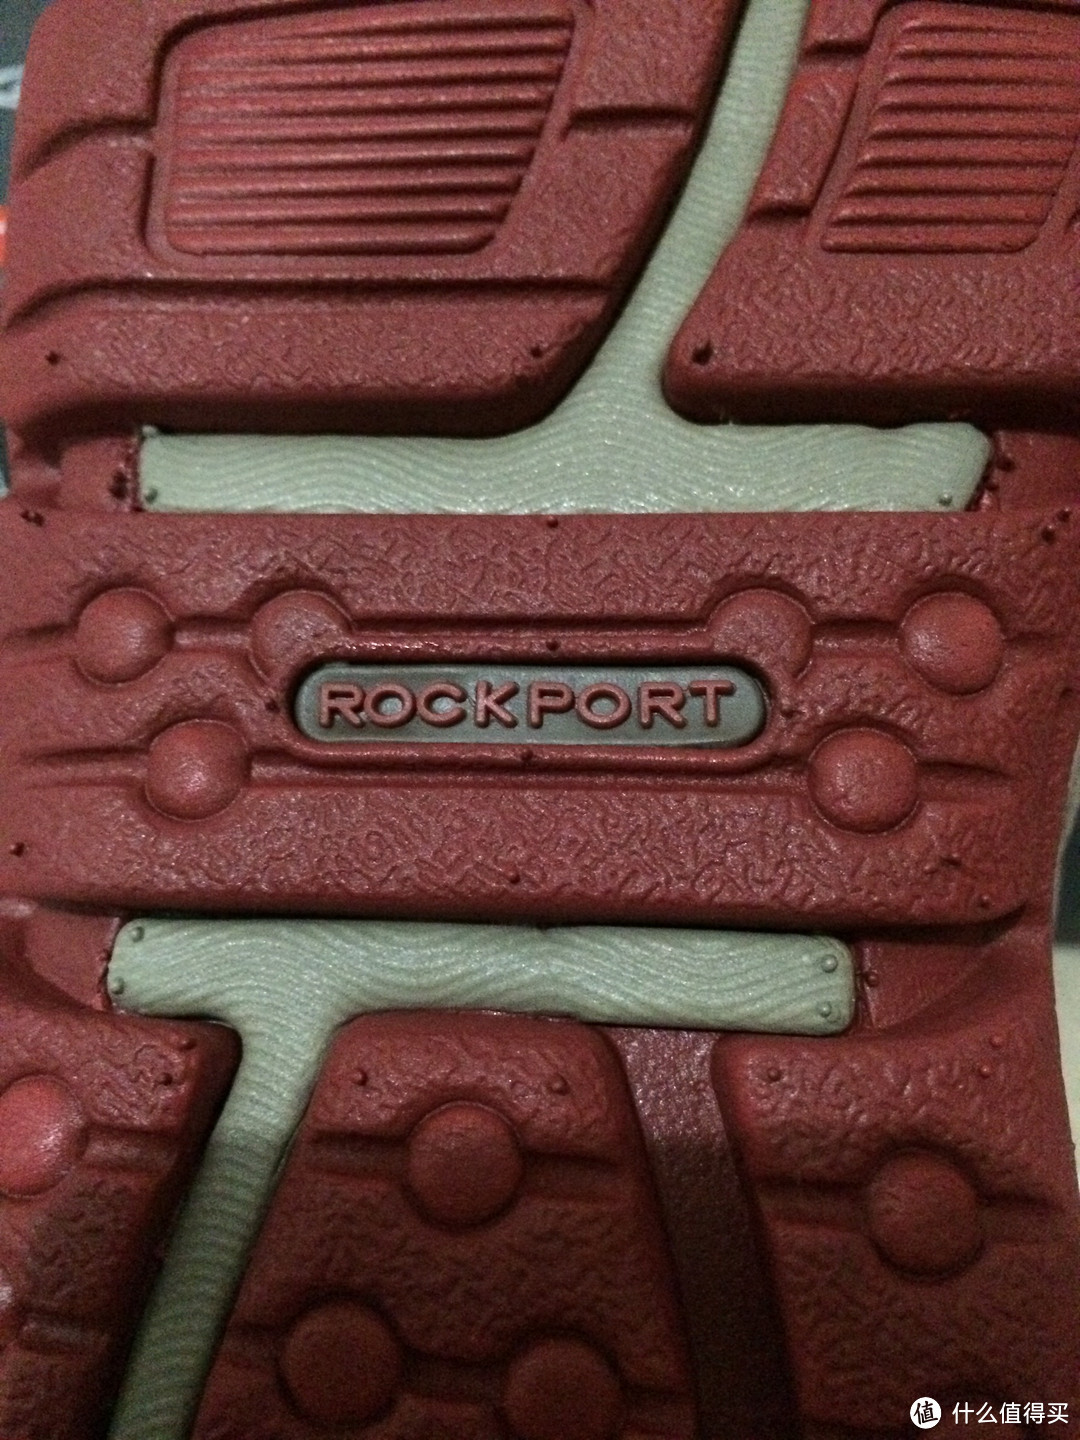 Rockport 乐步 RocSports Lite 2 Chukka 男靴